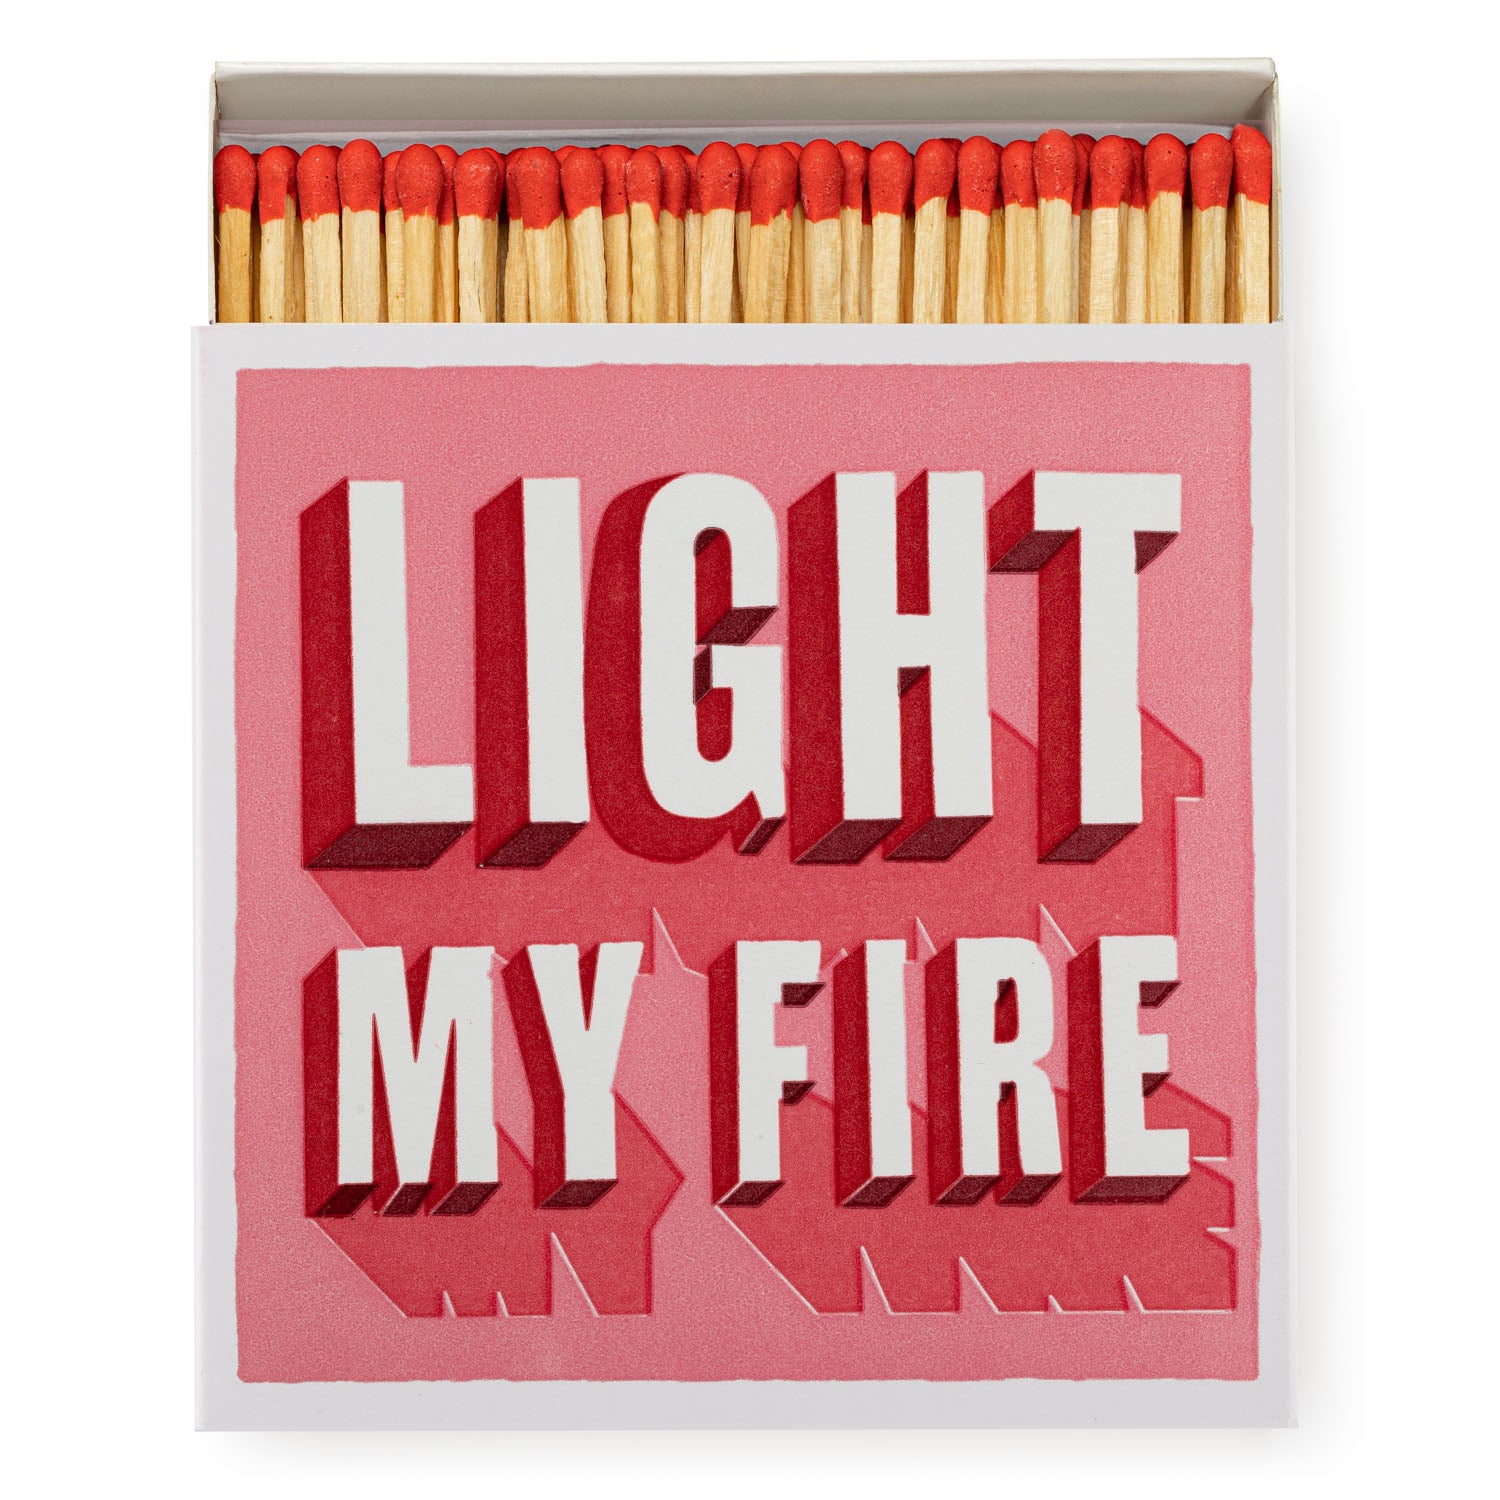 Archivist Gallery Matches - Light My Fire